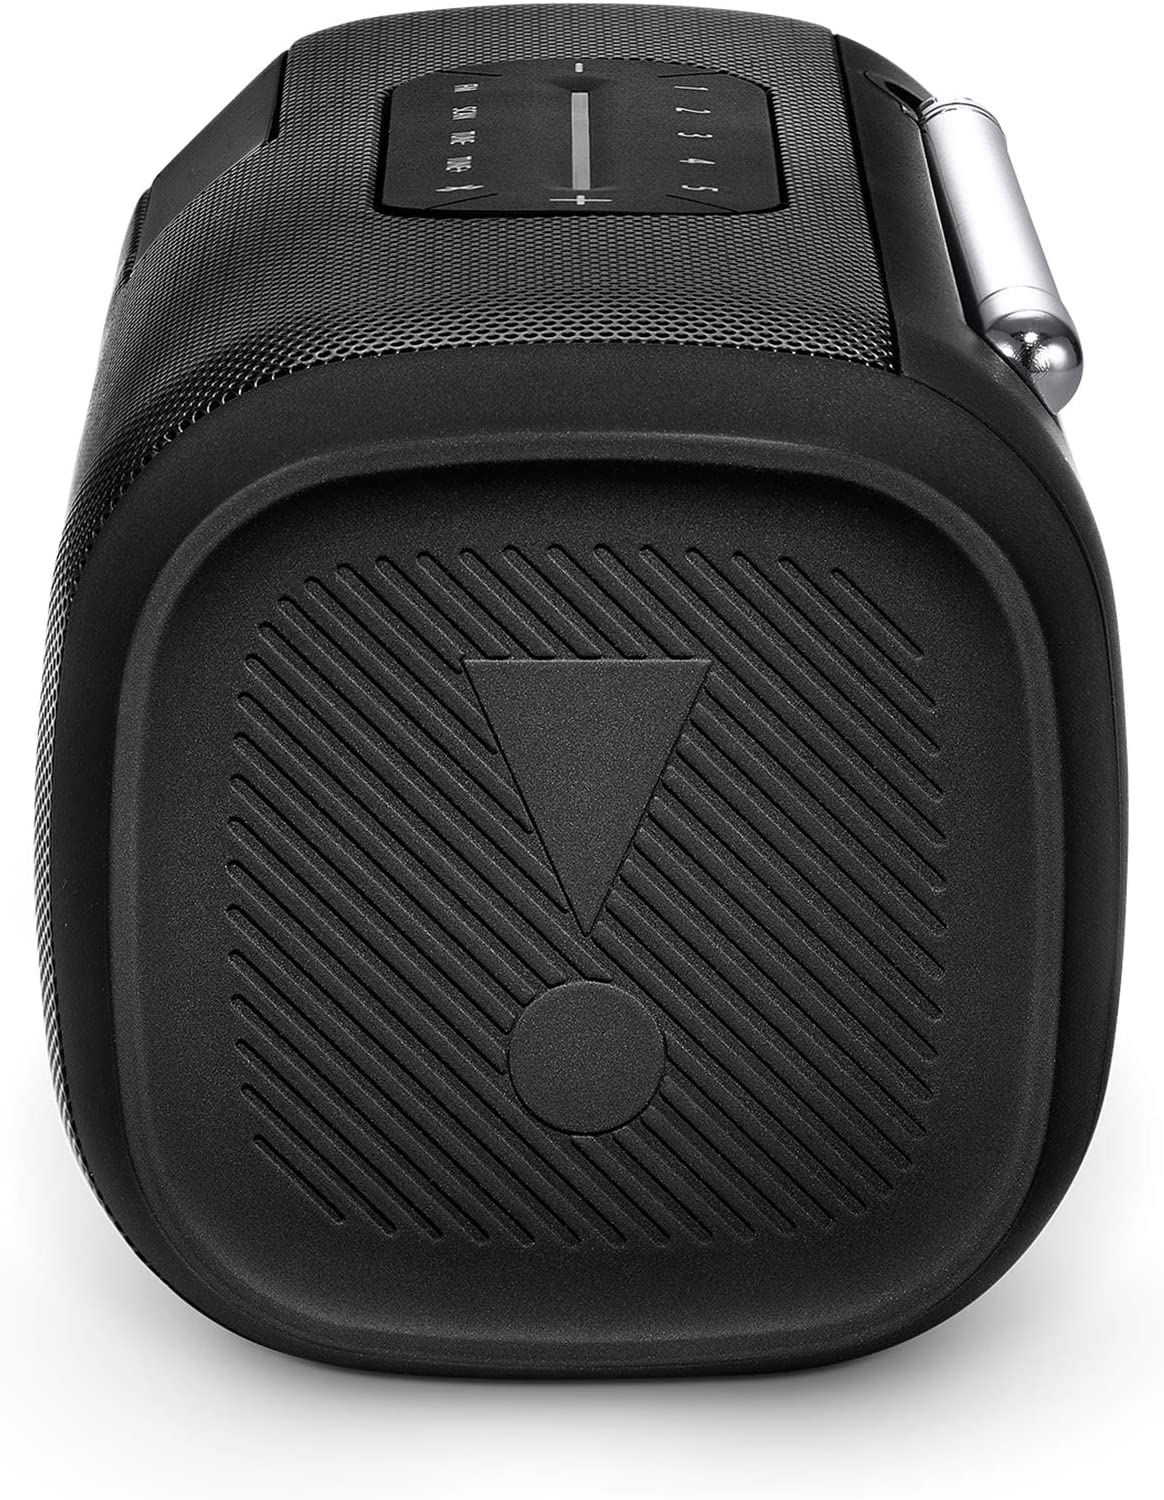 jbl tuner - portable bluetooth speaker with dab and fm digital radio (jbl-tuner-blk)